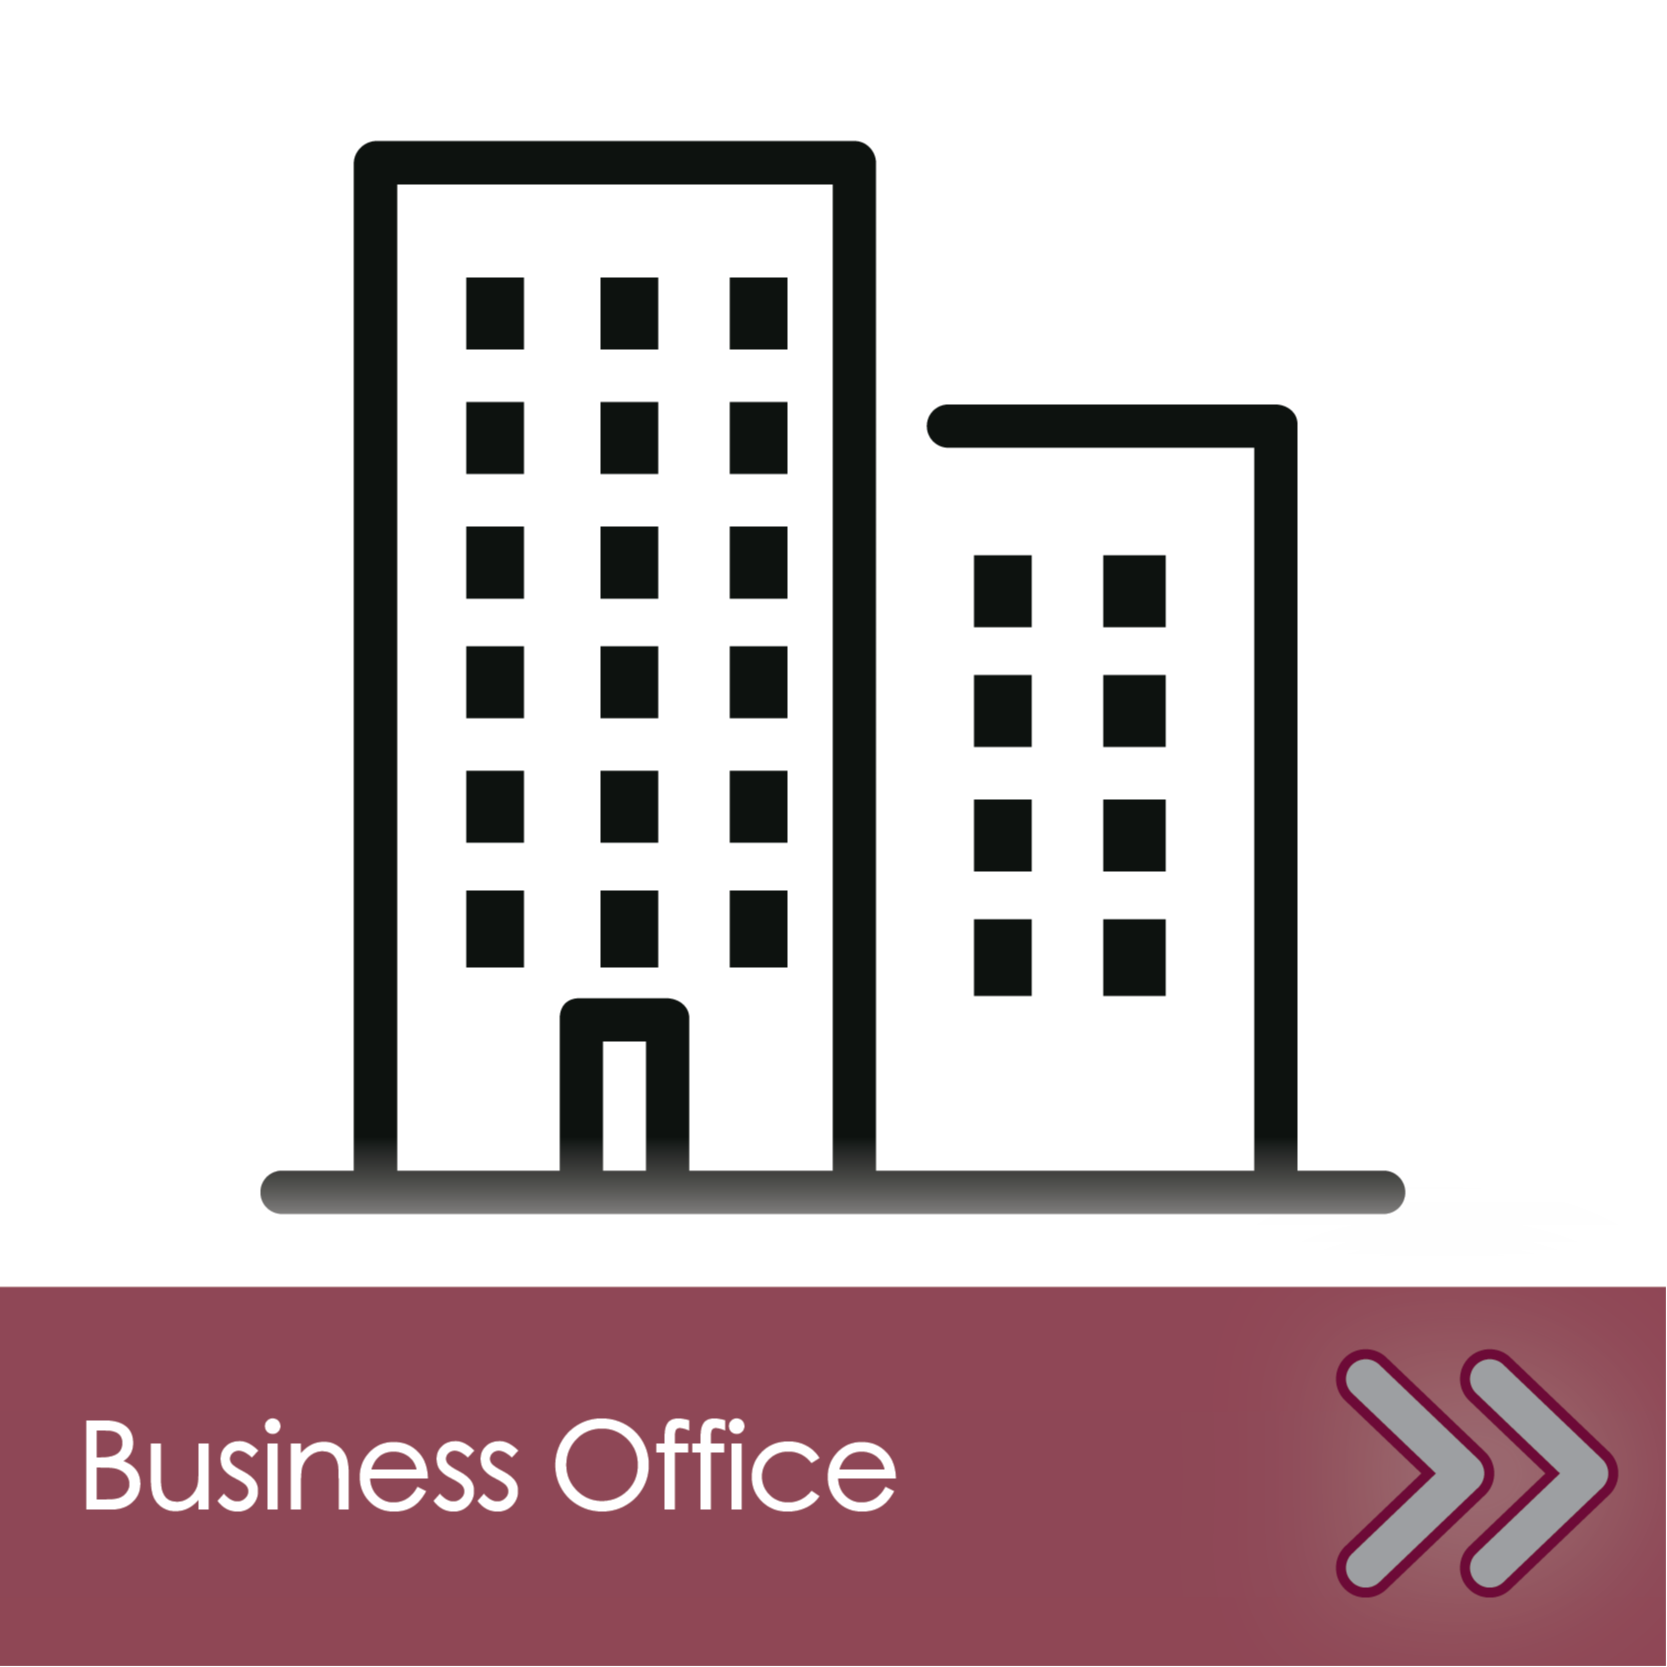 DCMO Business Office Navigation Link